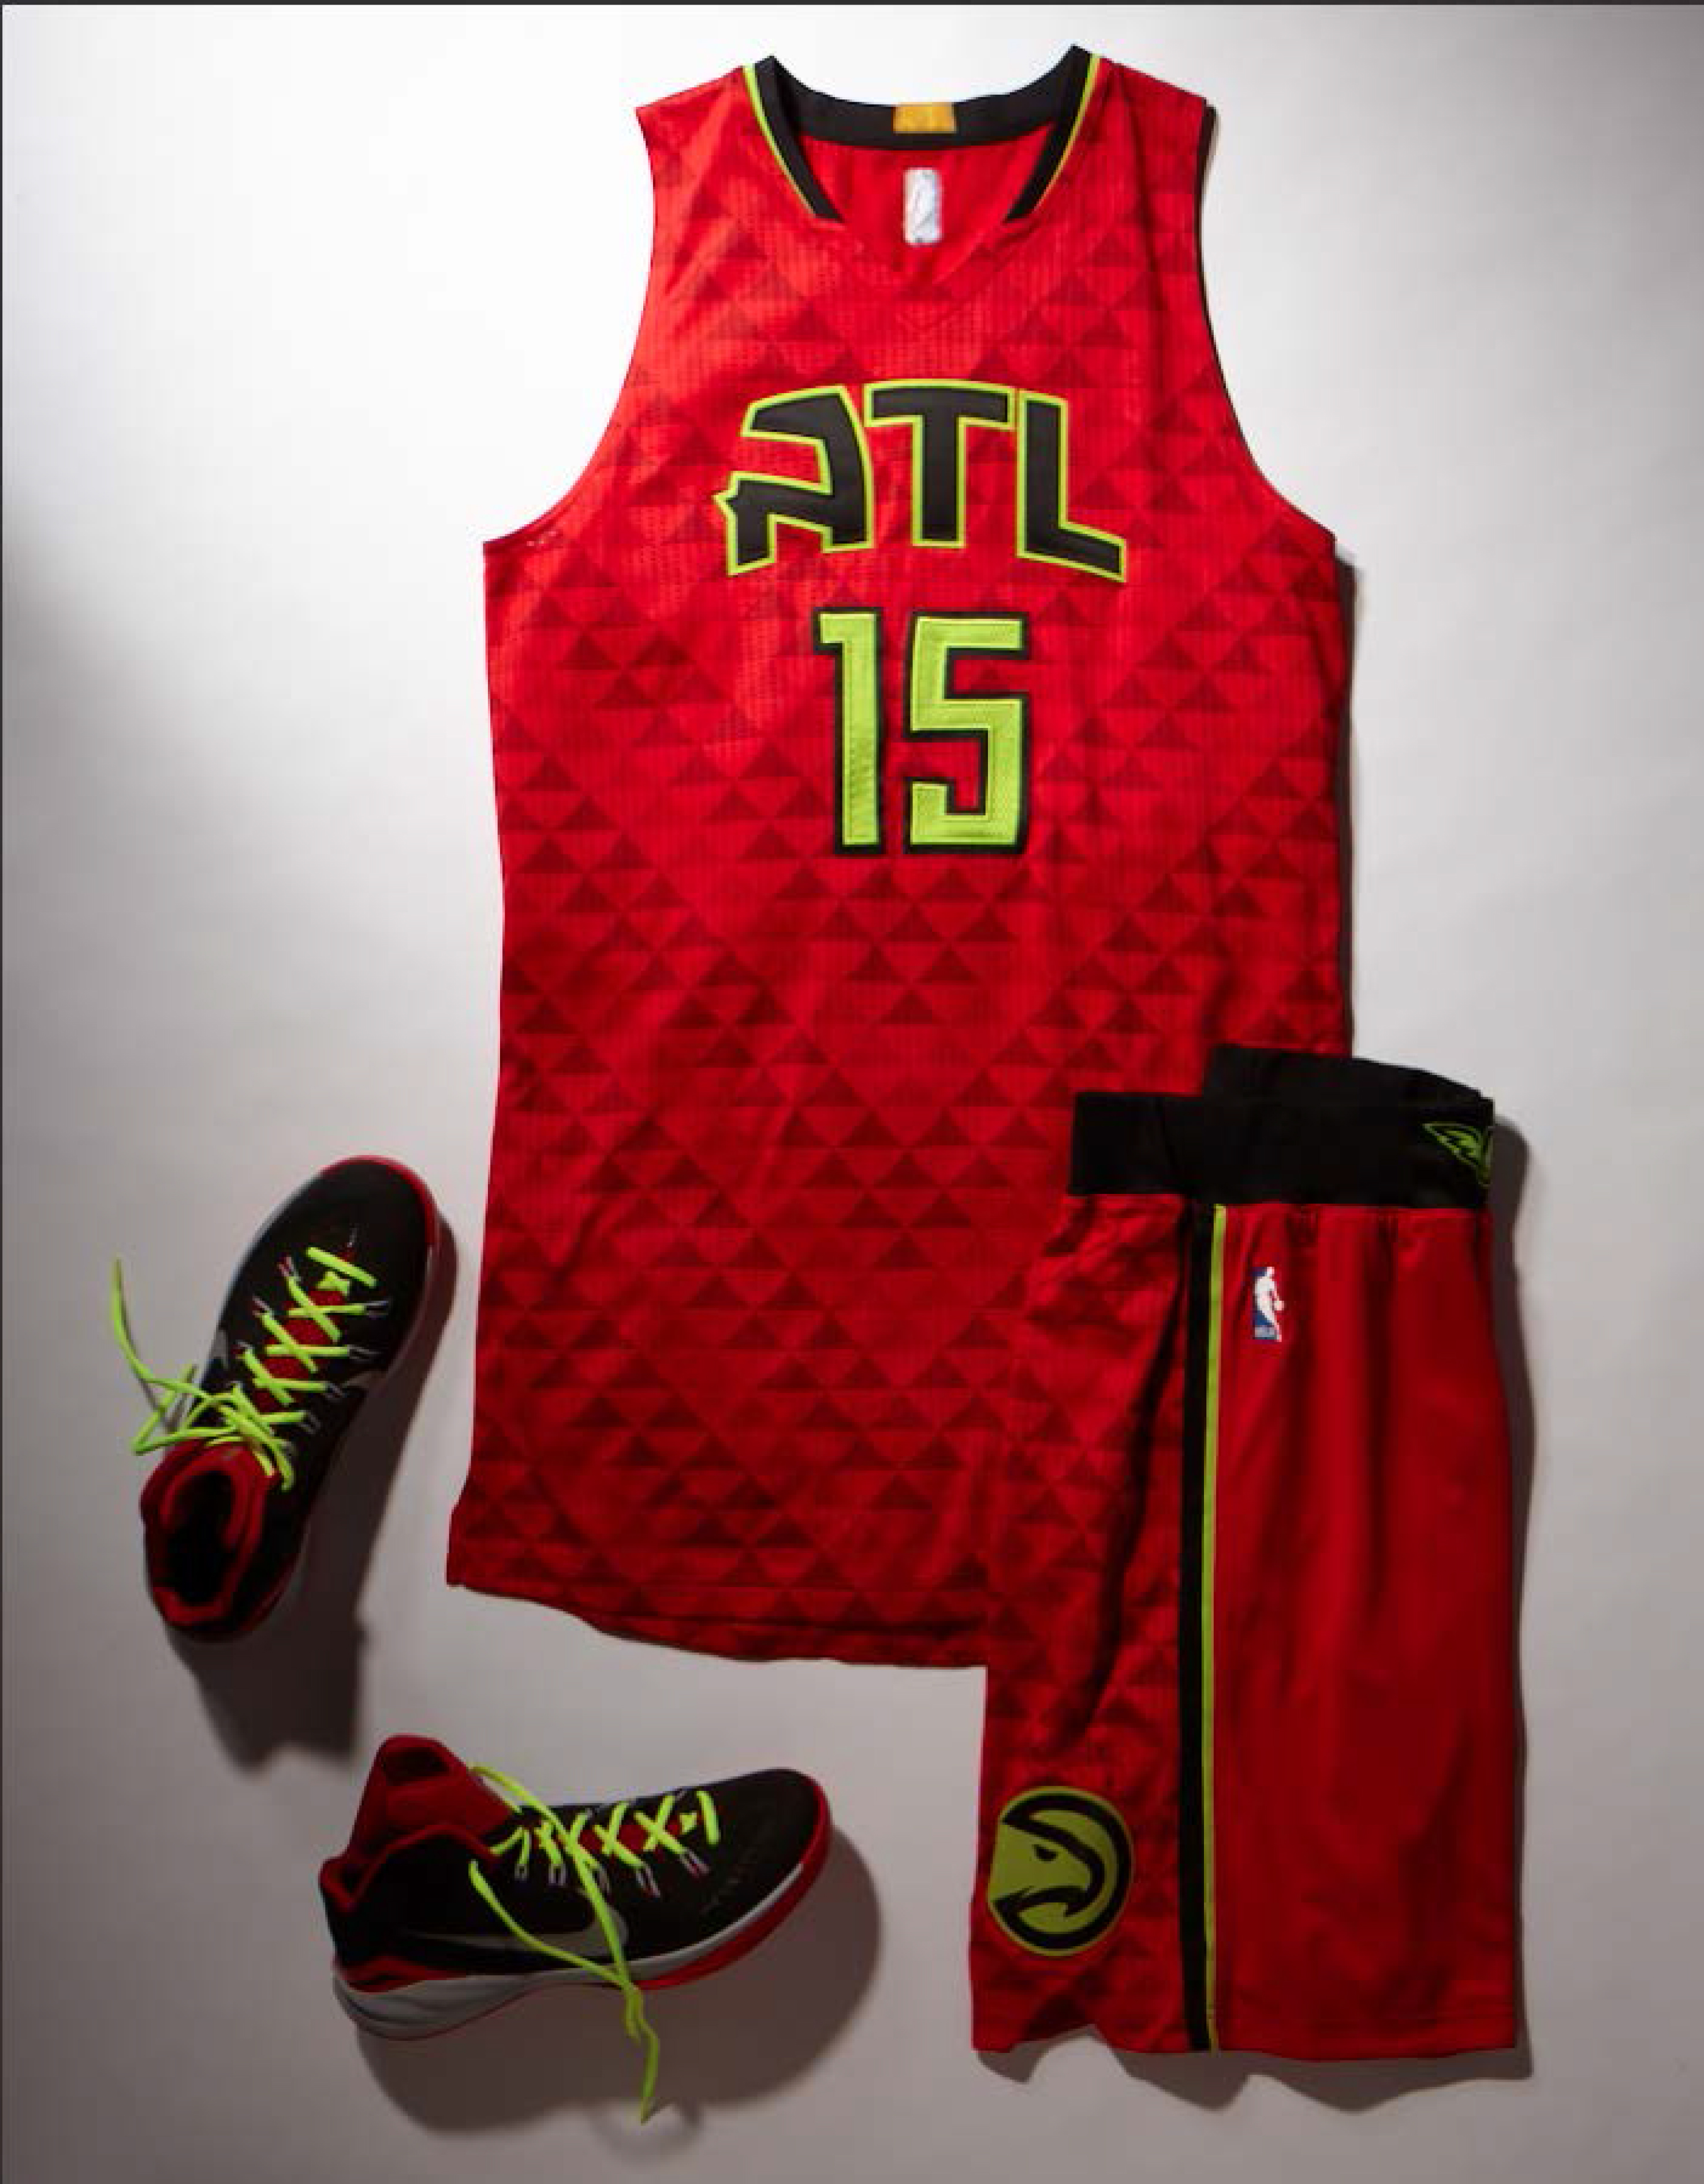 Hawks new uniforms unveiled